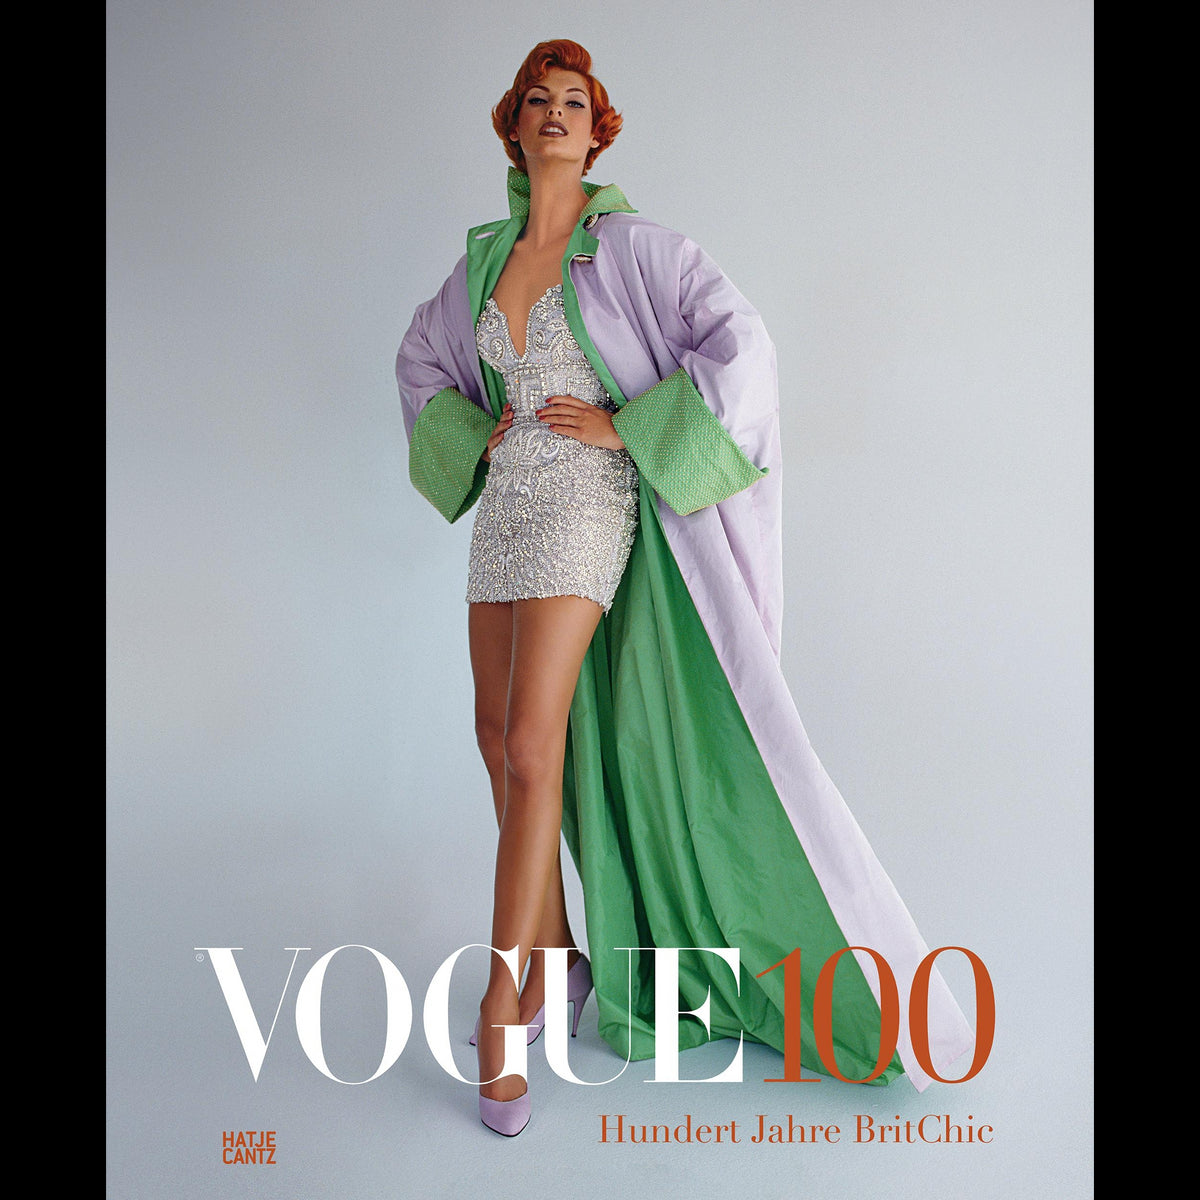 Coverbild Vogue 100